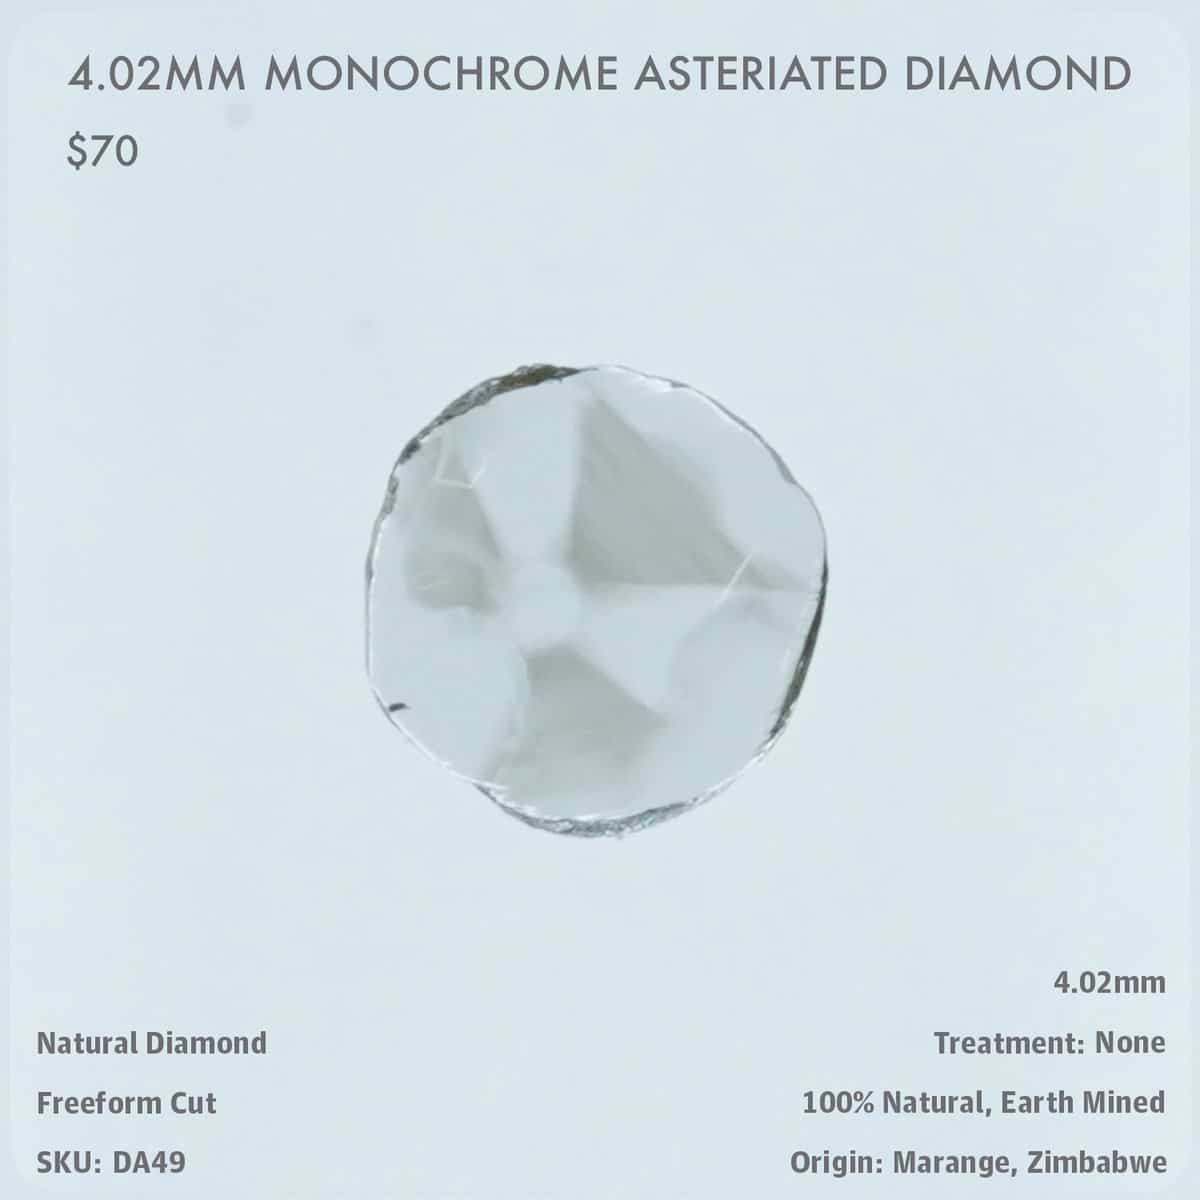 4.02mm Monochrome Asteriated Diamond